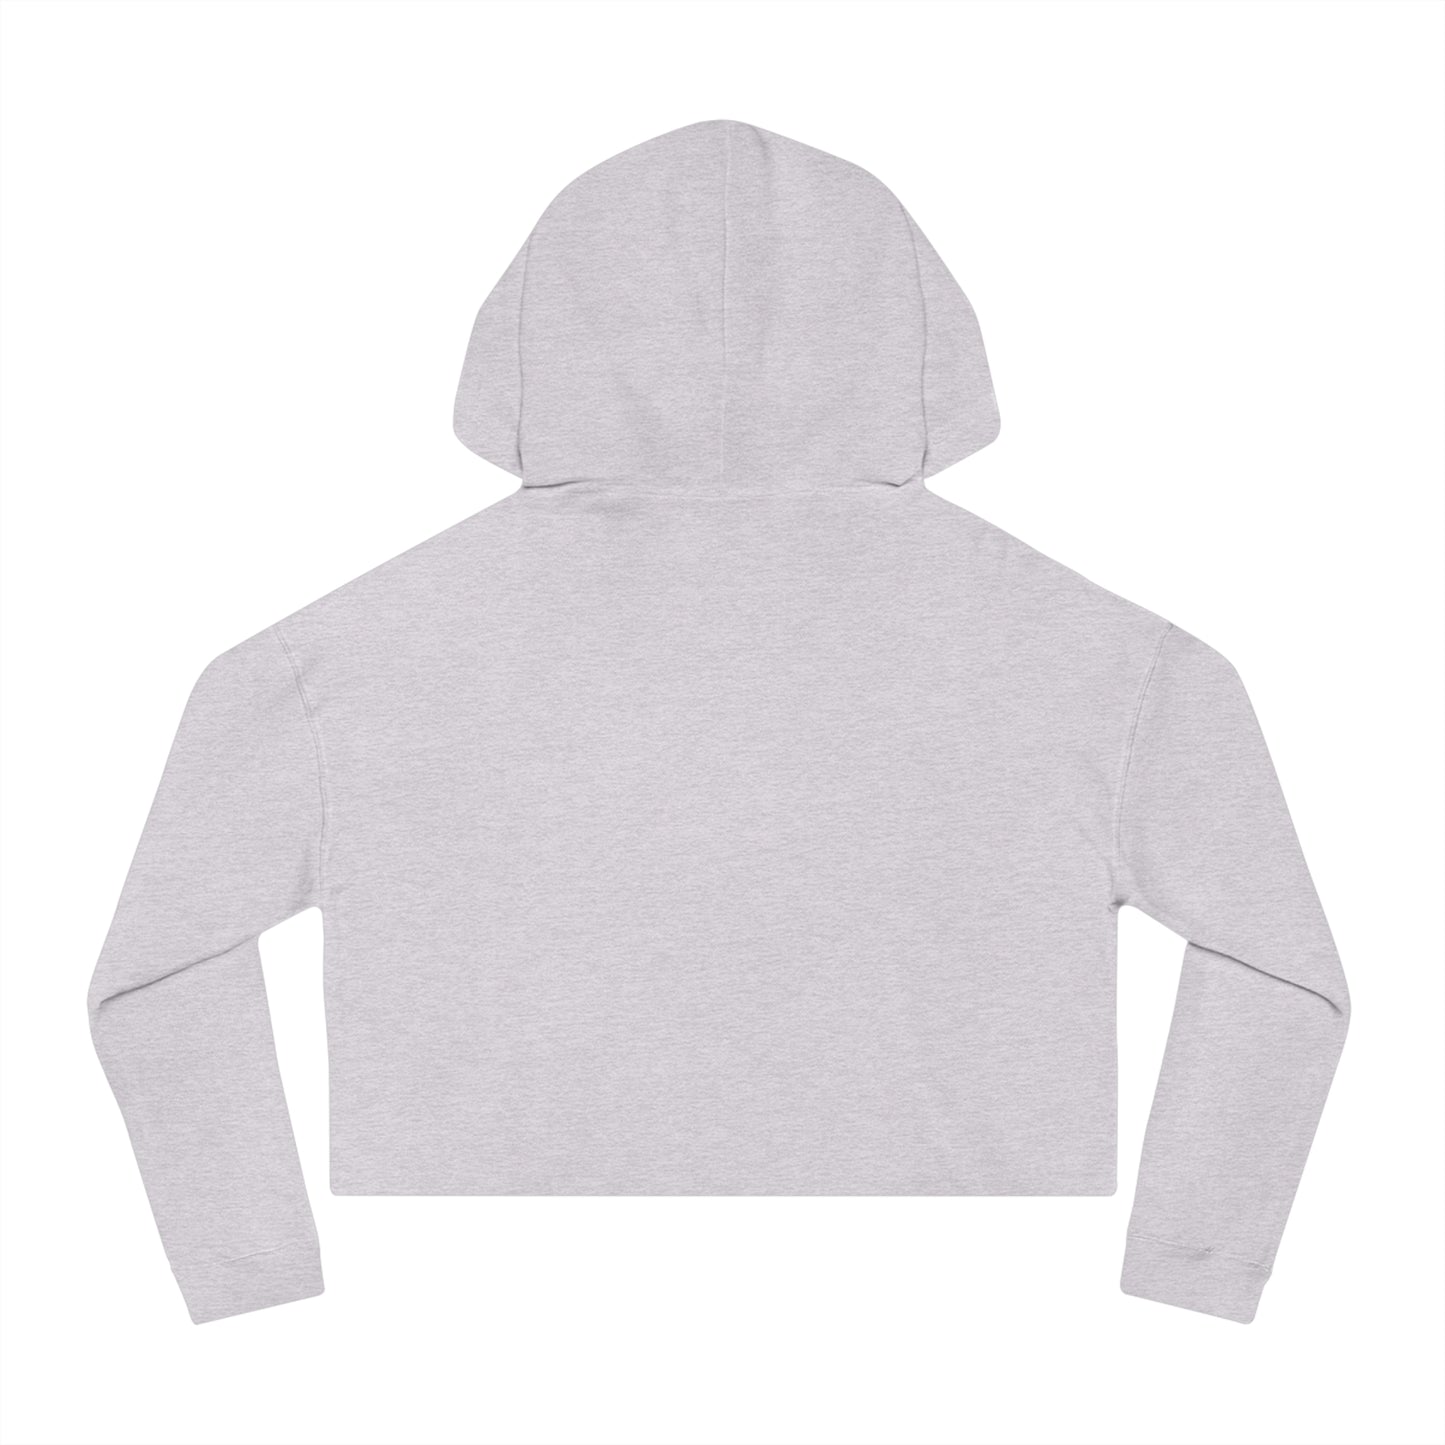 Women’s Cropped Hooded Sweatshirt - go sage yourself v2